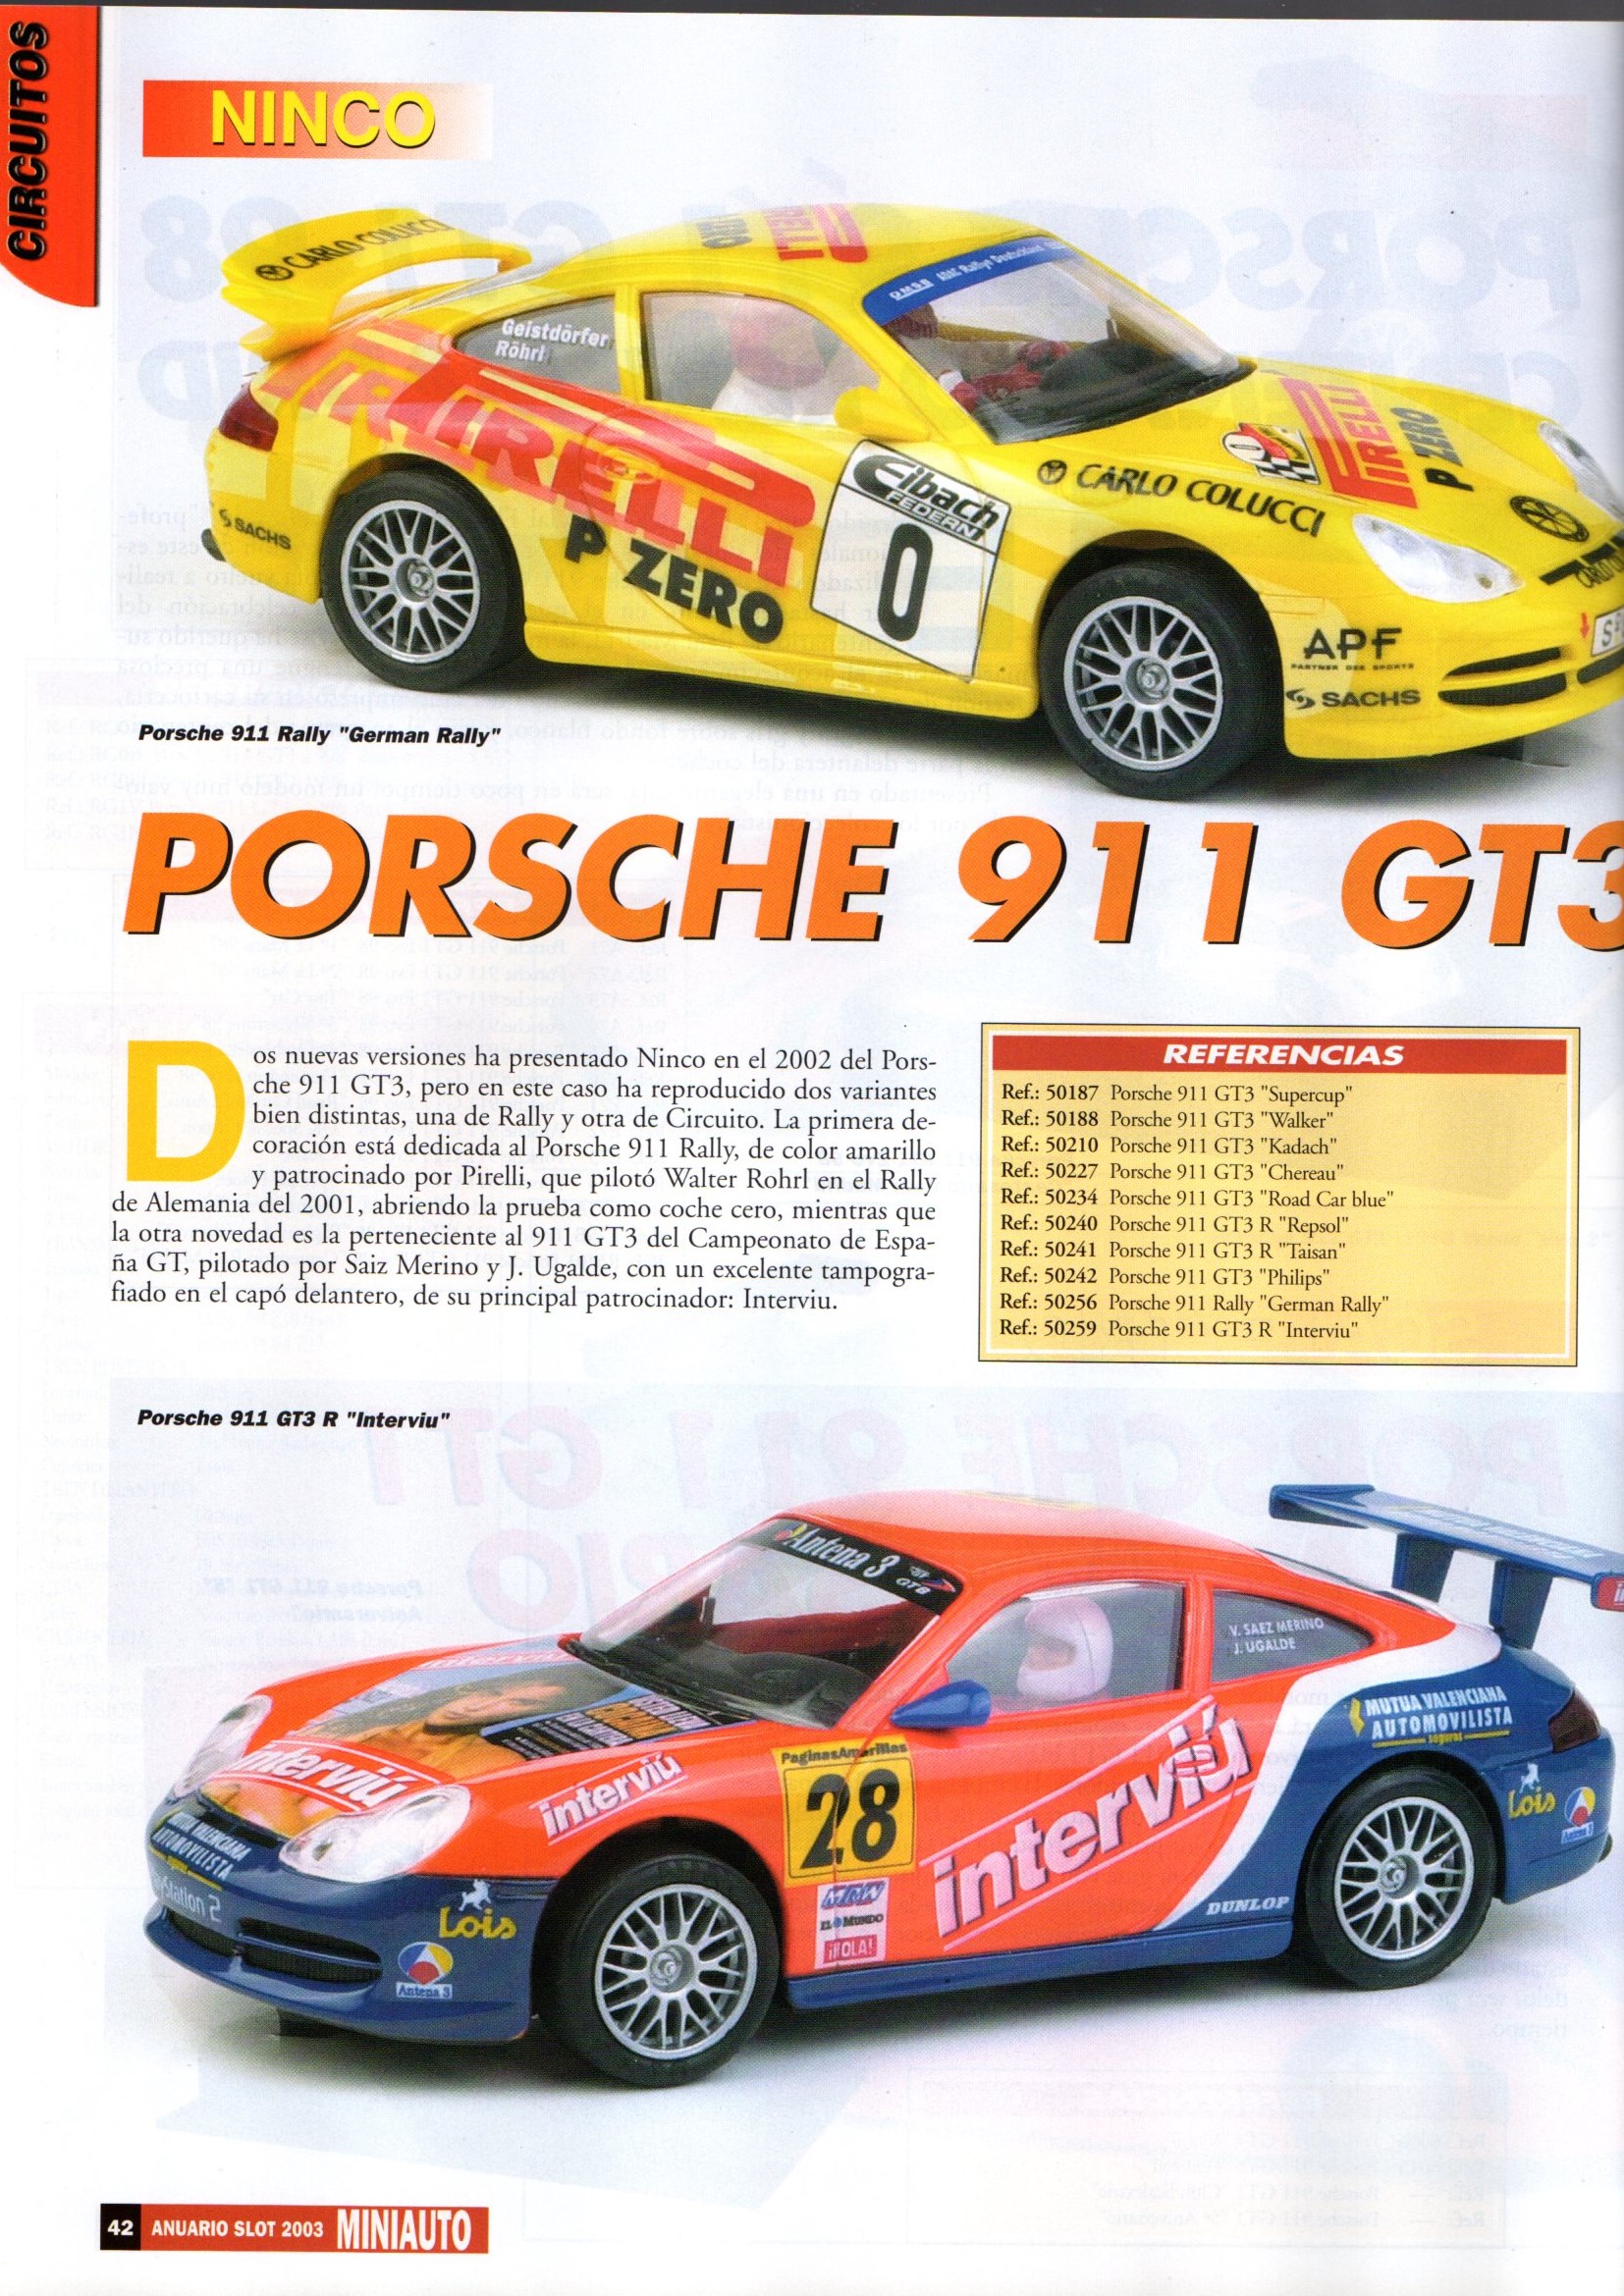 Porsche 911 GT3 R (50240